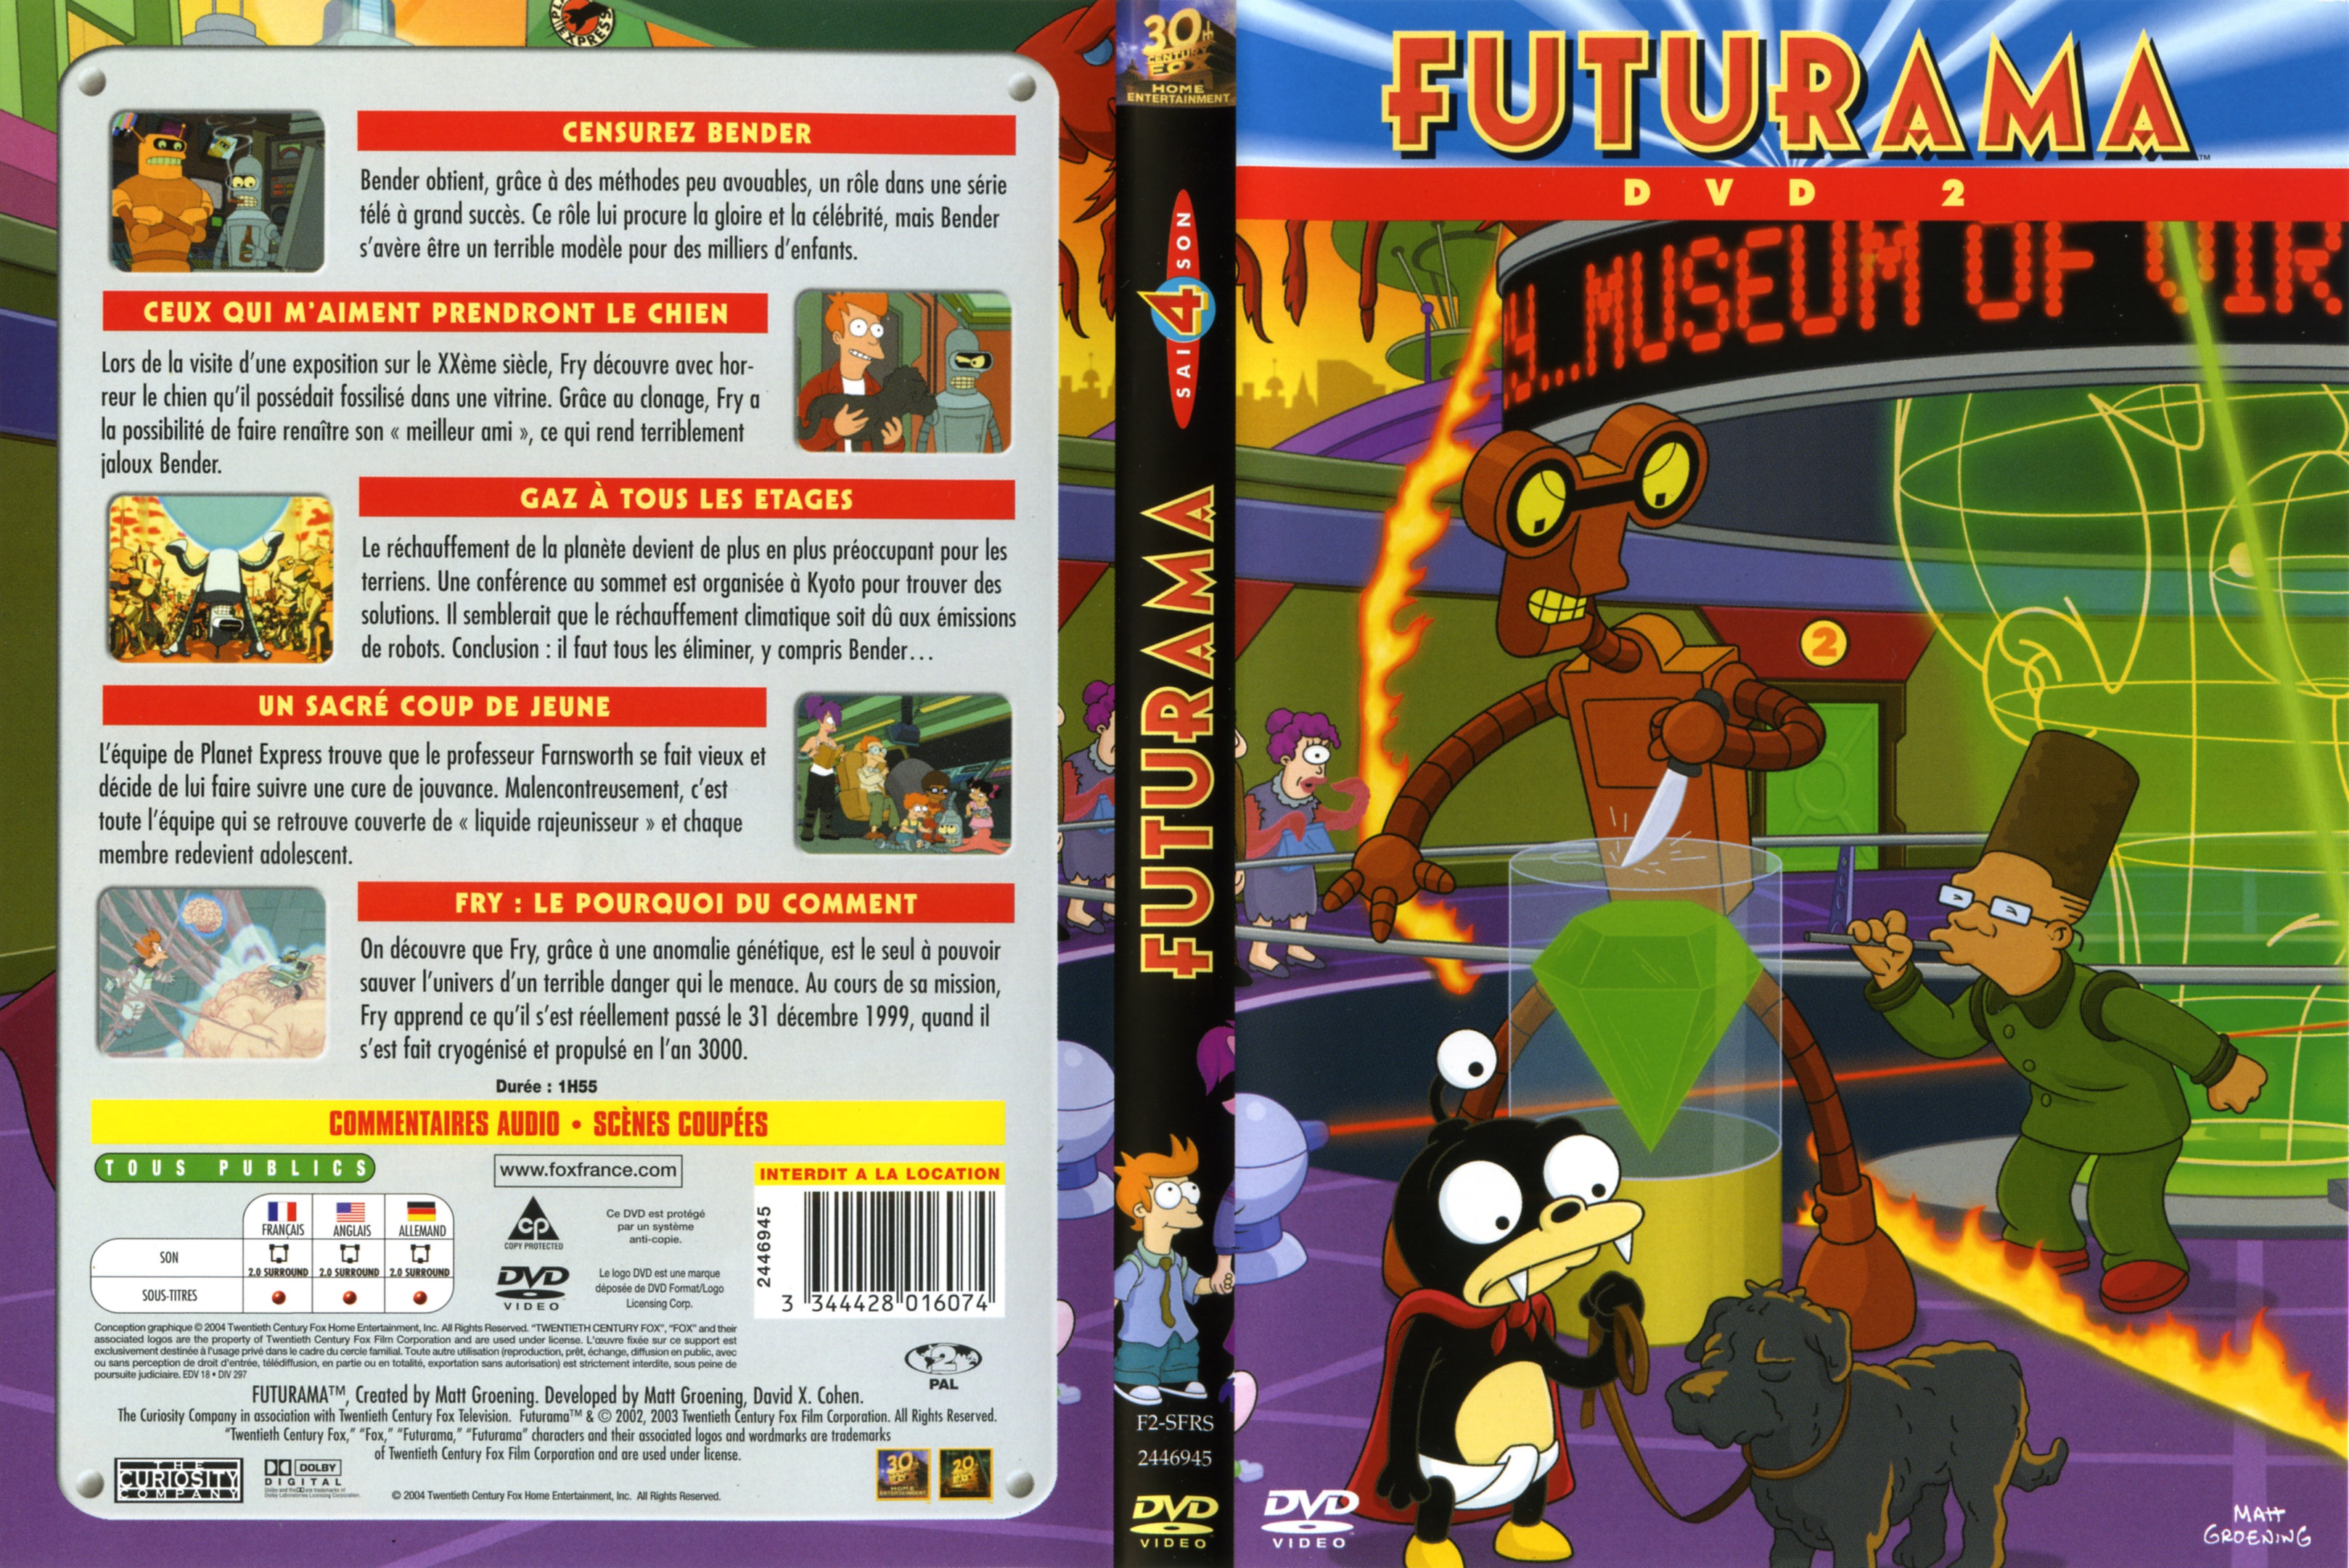 Jaquette DVD Futurama saison 4 DVD 2